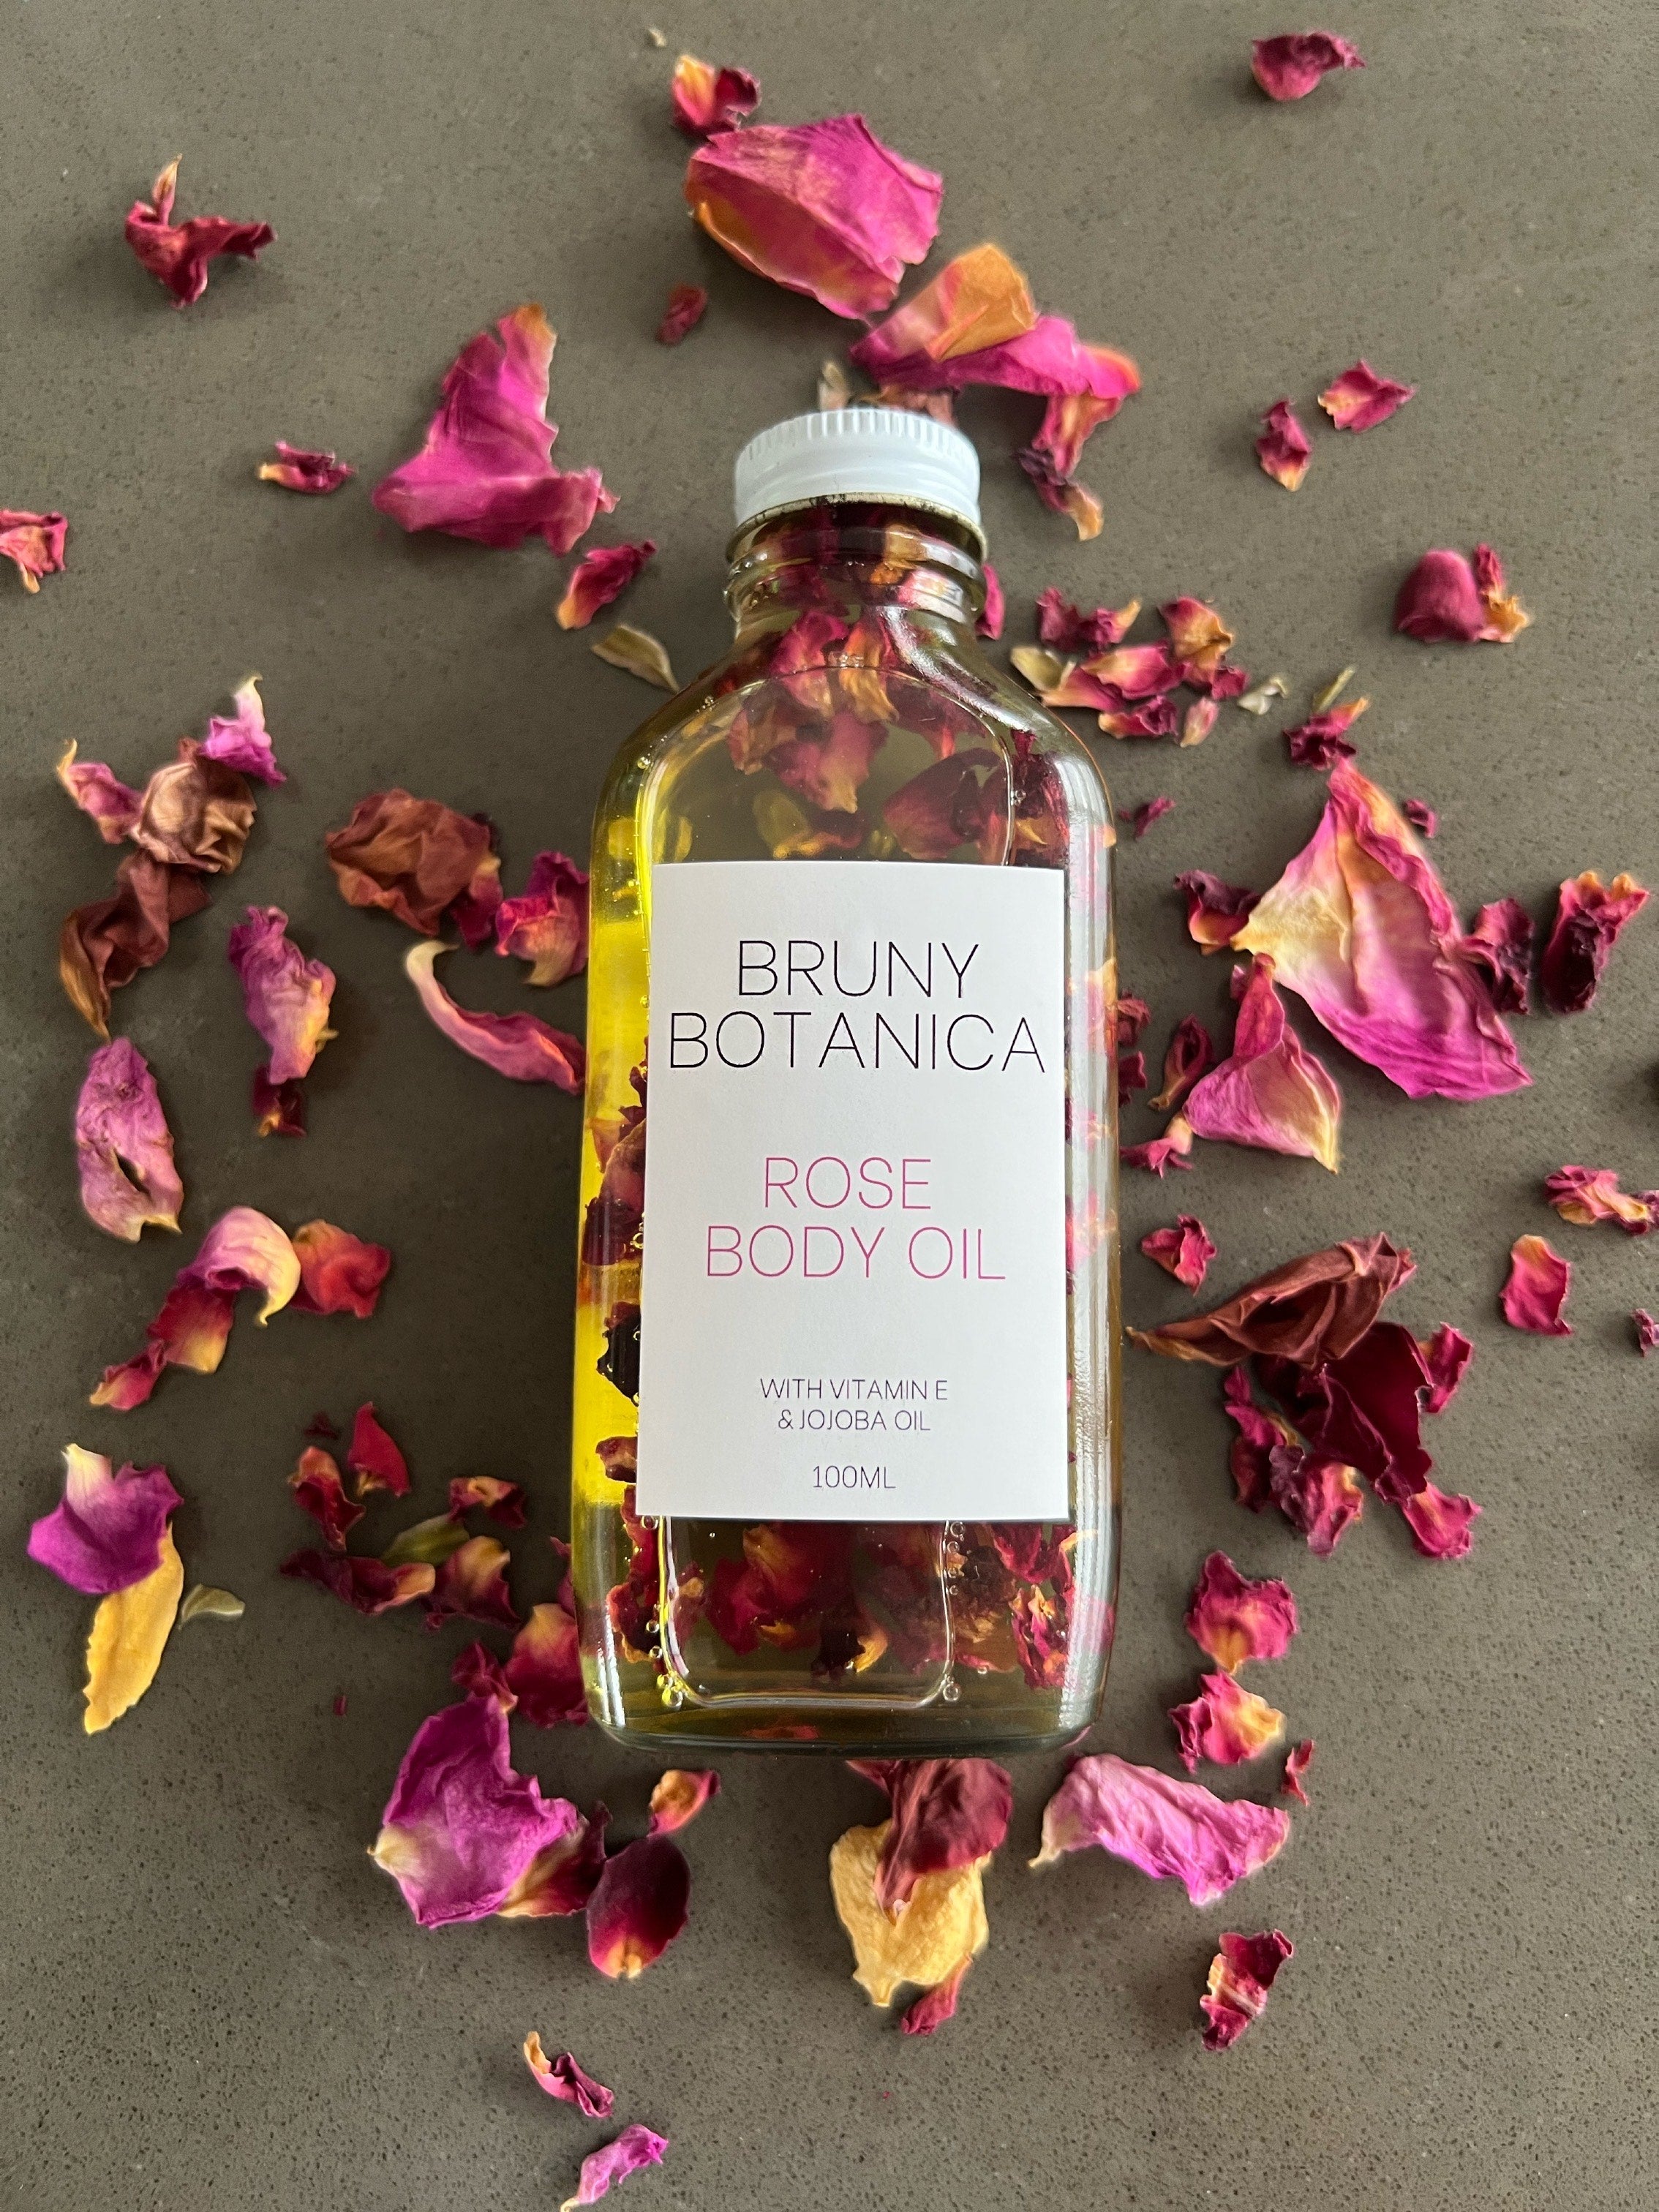 Rose Body Oil by Bruny Botanica Bath & Body Bruny Botanica 